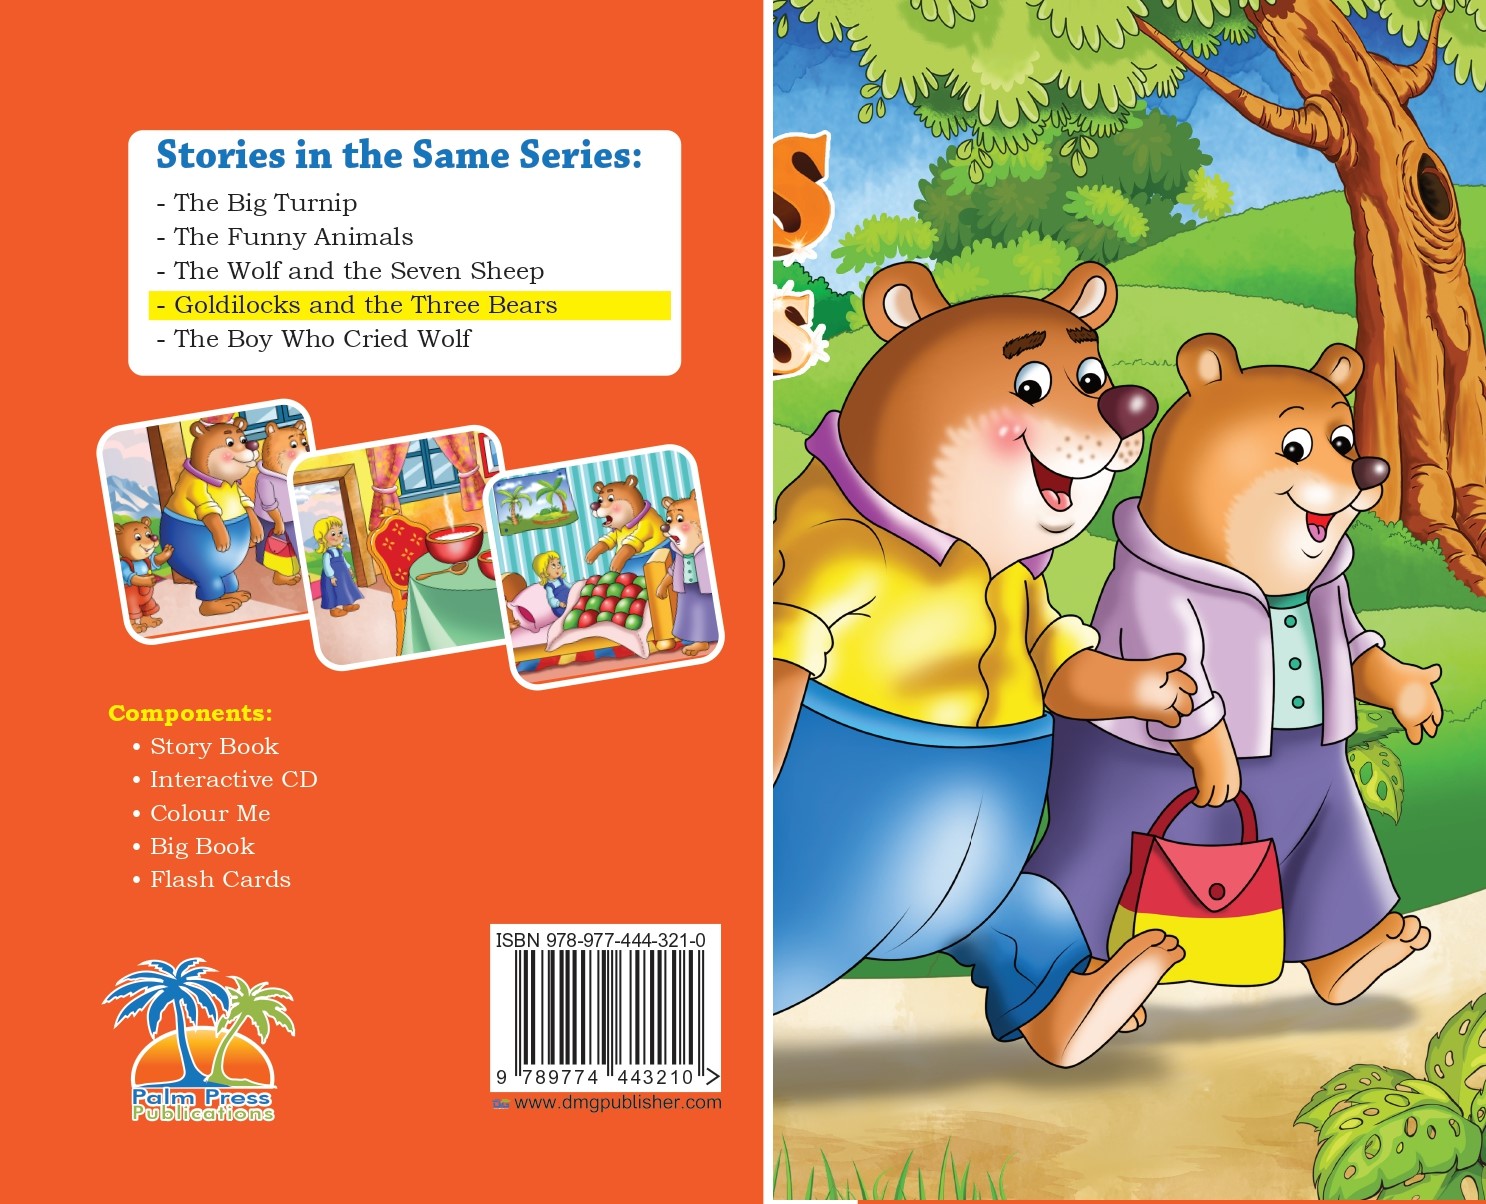 Goldilocks And The Three Bears  